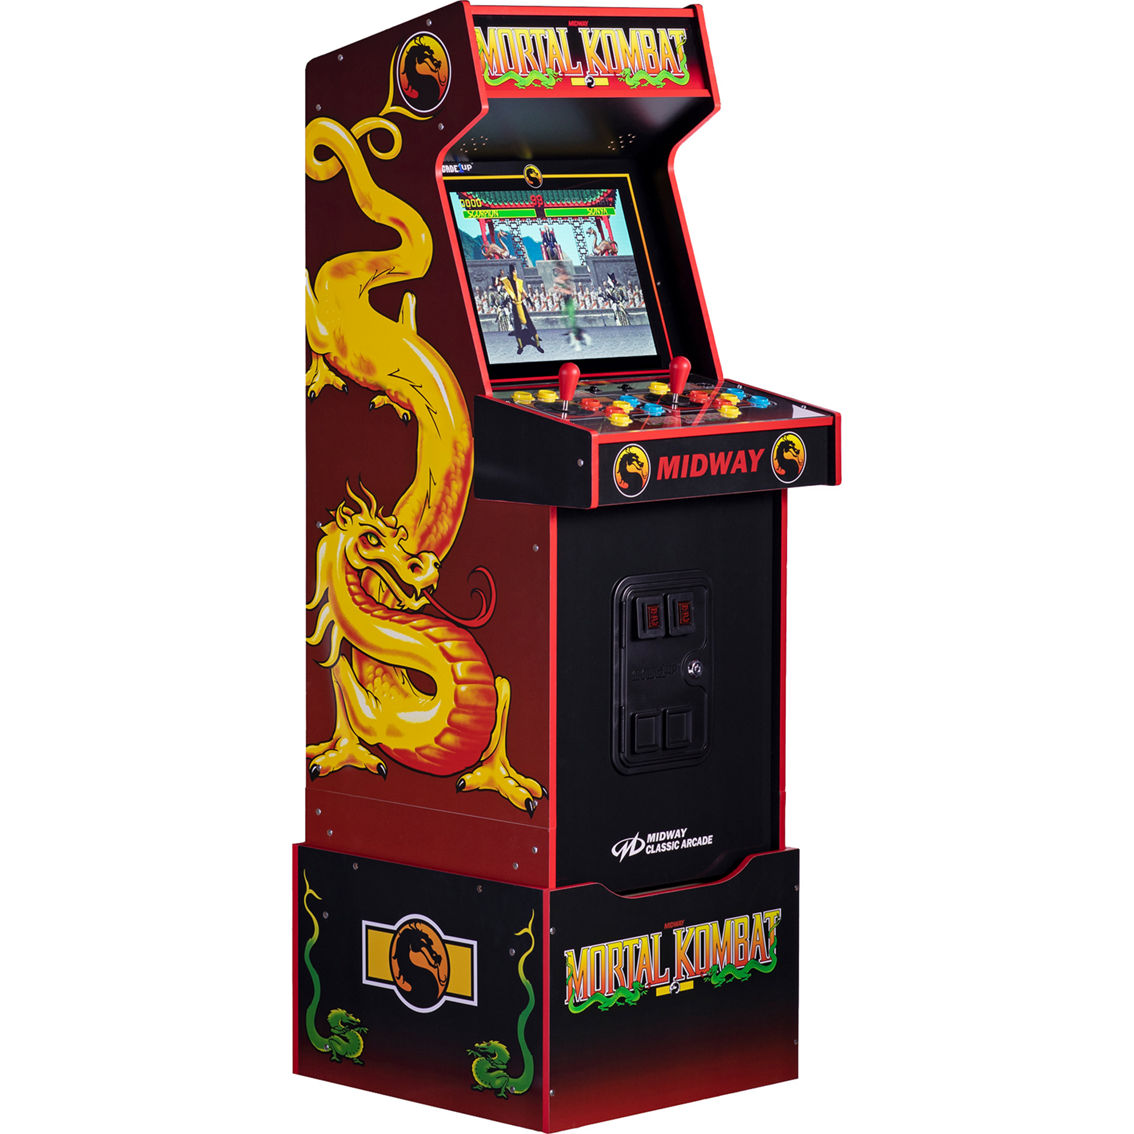 Arcade 1UP MK 30th Anniversary Edition Legacy